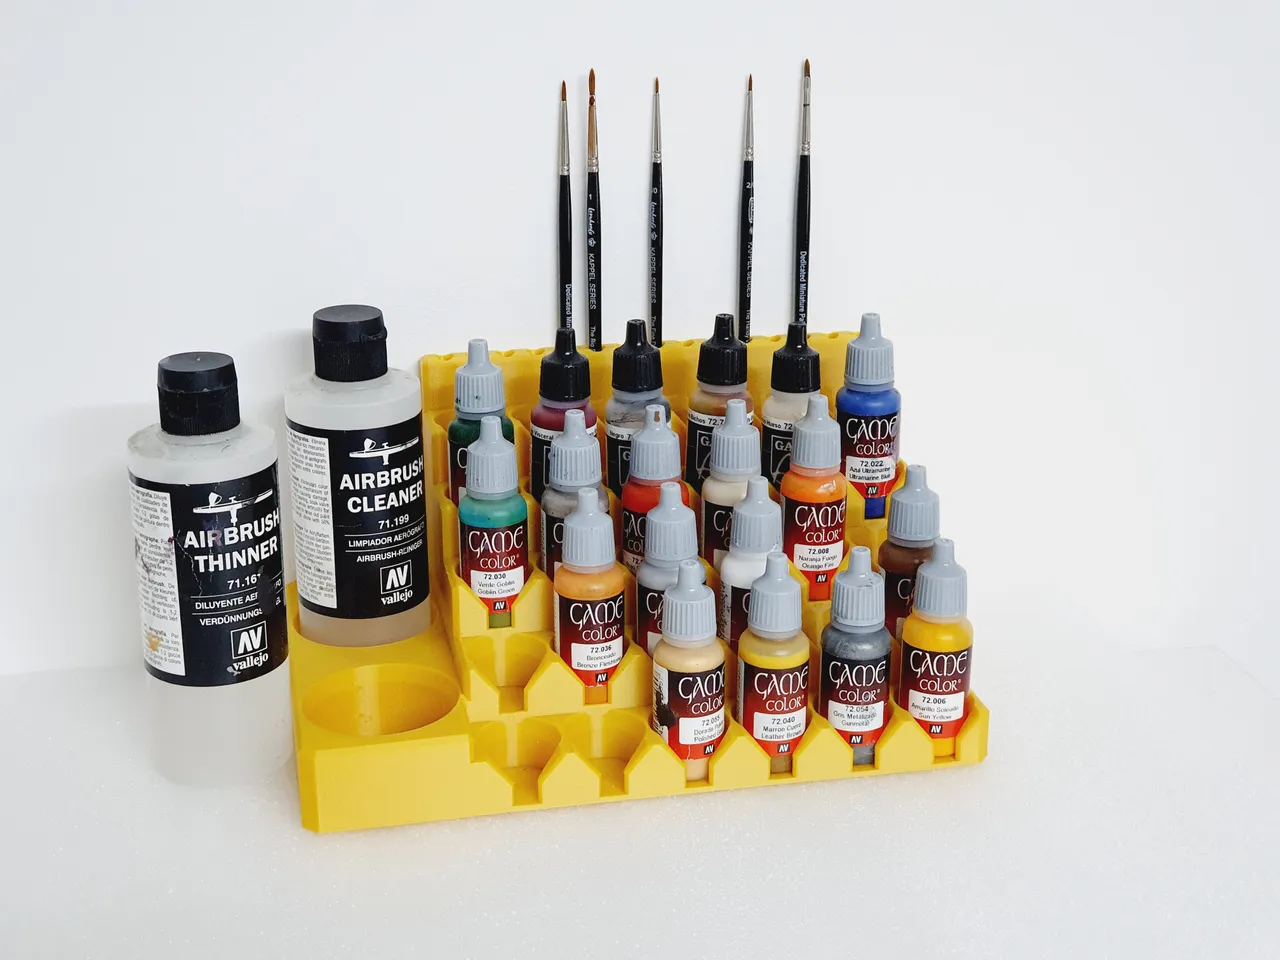 Vallejo paint rack for 7ml bottles by WF3D